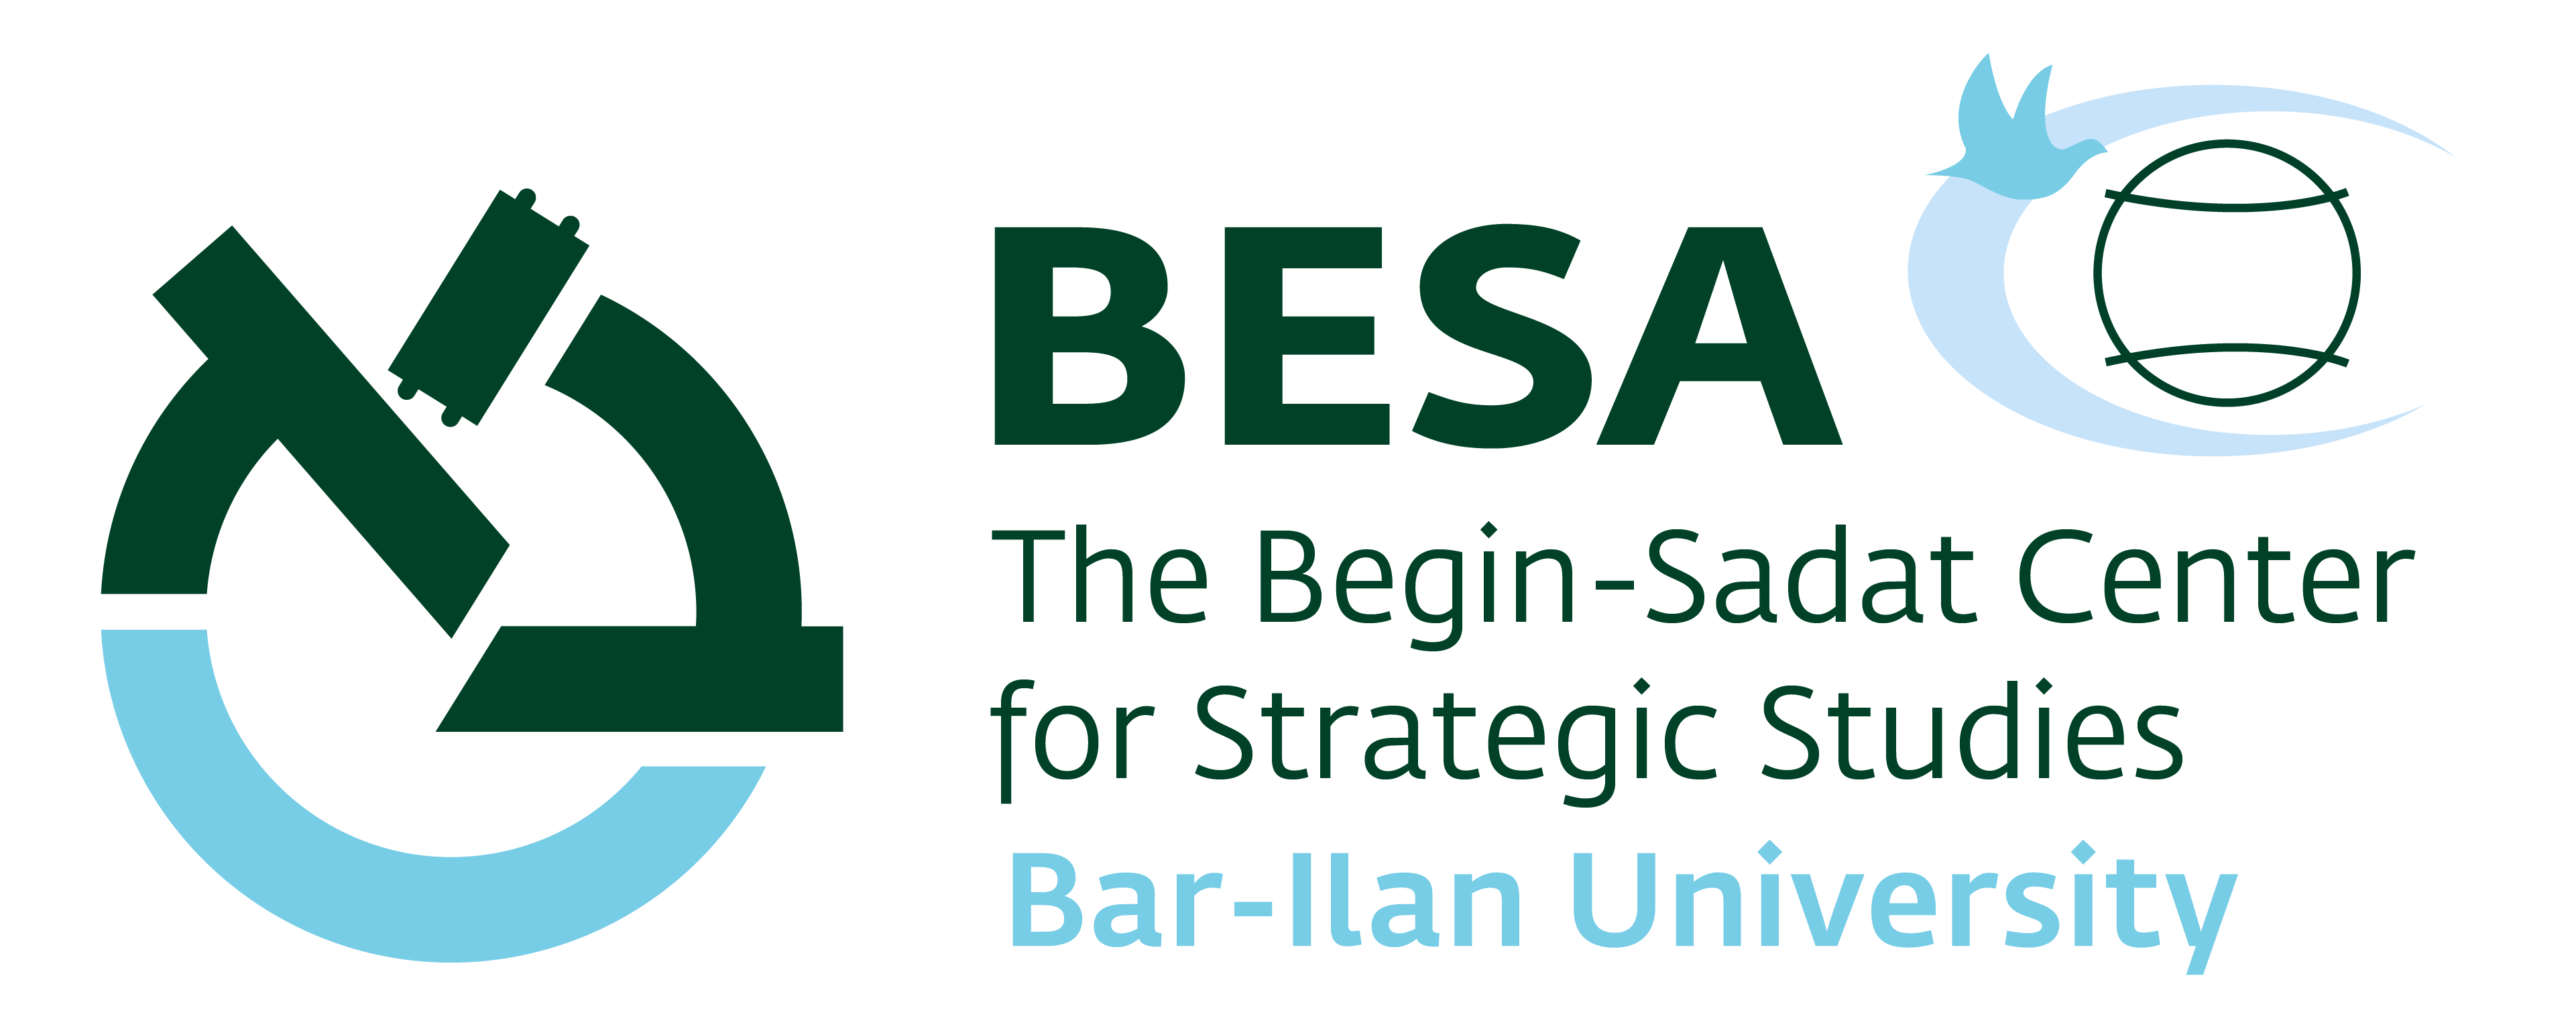 BESA - The Begin-Sadat Center for Strategic Studies. Bar-Ilan University